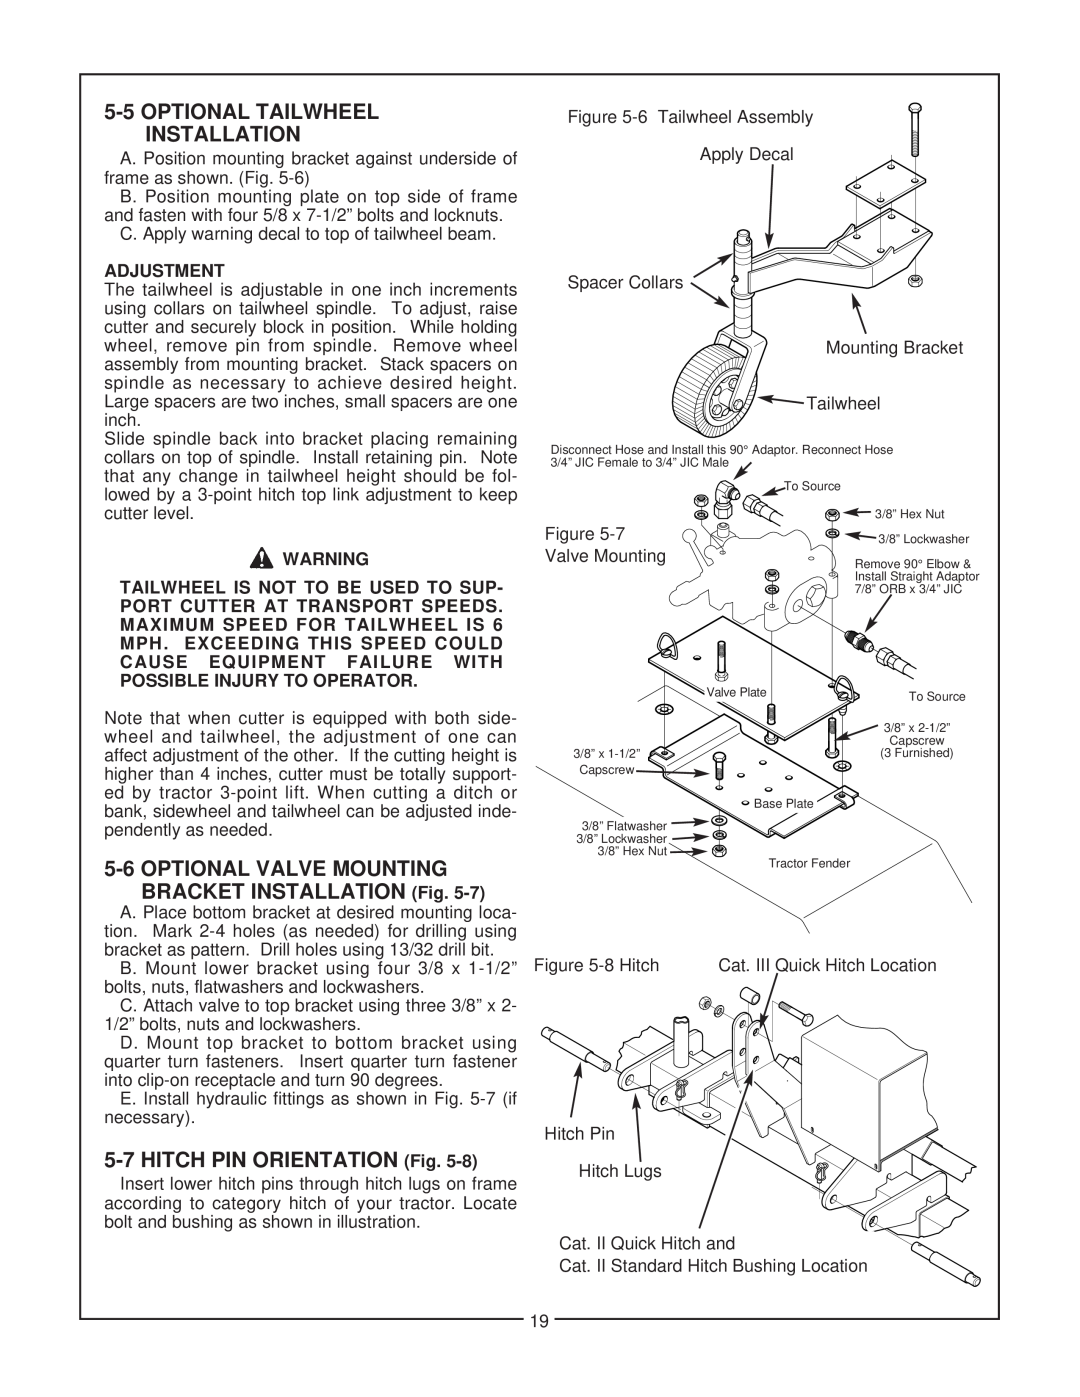 Bush Hog SM 60 manual 5-5OPTIONAL TAILWHEEL INSTALLATION, 5-7HITCH PIN ORIENTATION Fig, Adjustment 